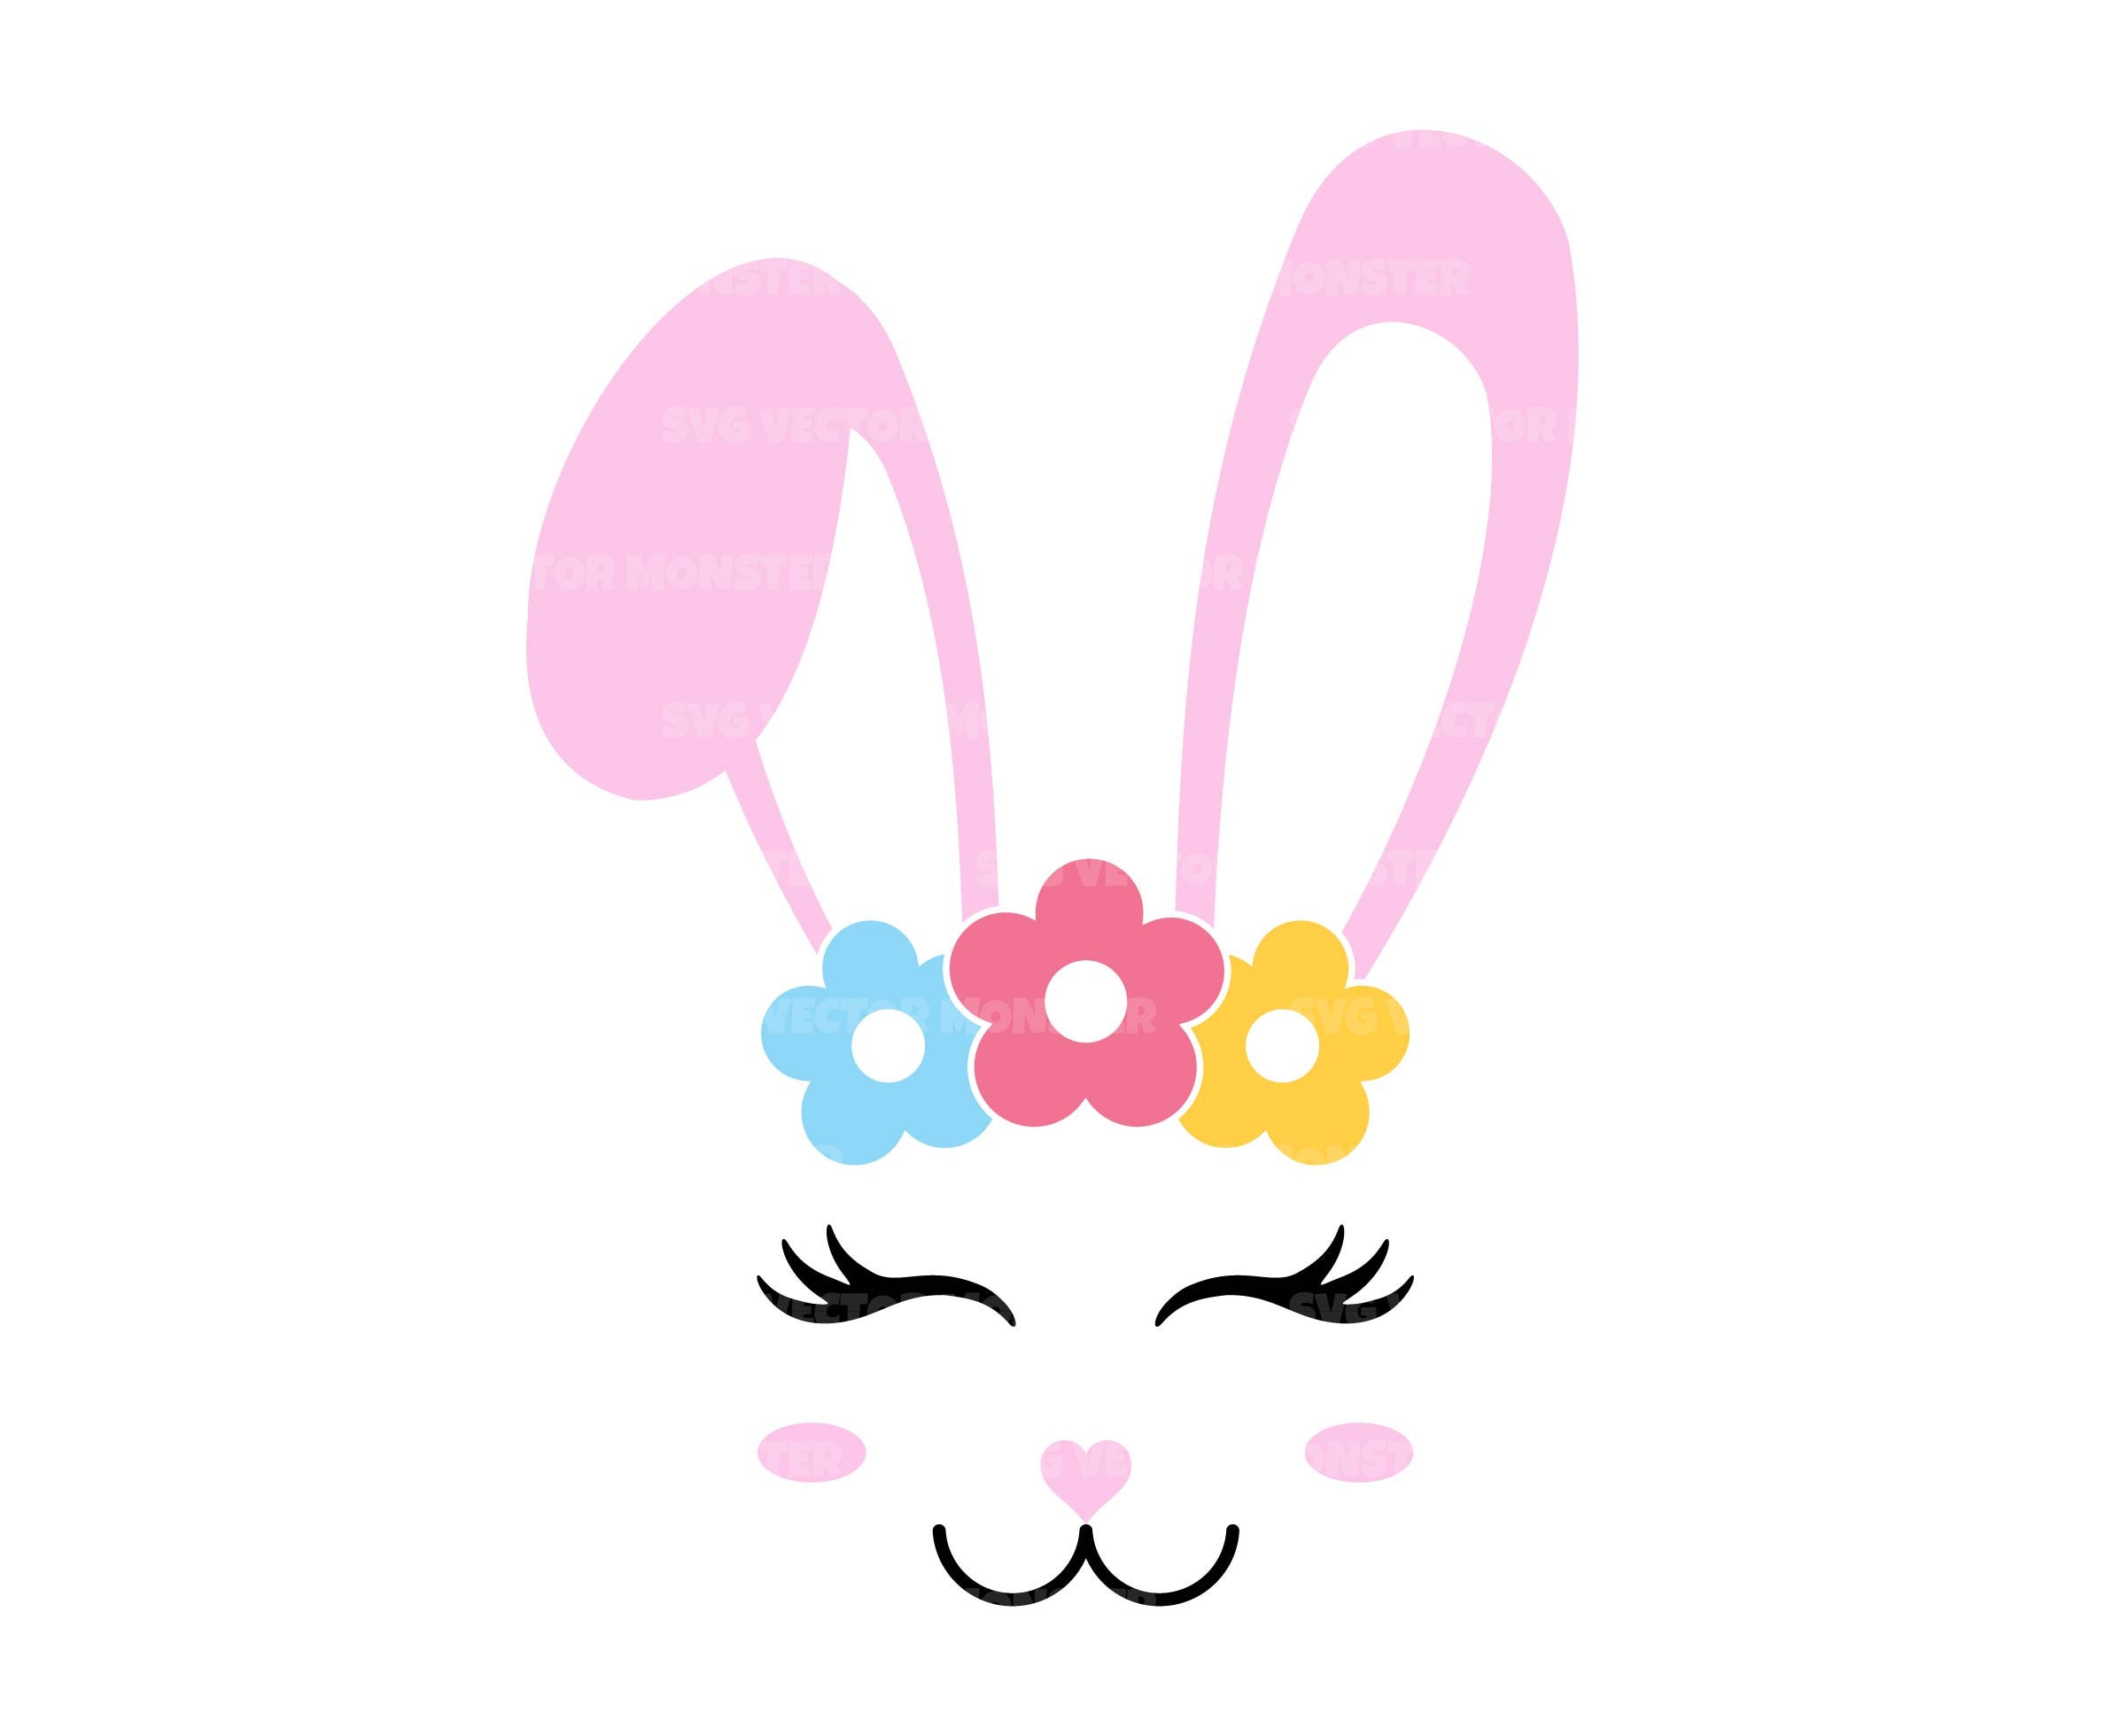 Easter Bunny Bundle, Spring Bunny Ears Bunny Face Easter Bunny Eyes Nose  Cut File Svg Png Kids Bunny Monogram Boy Girl Bunny Cliparts 